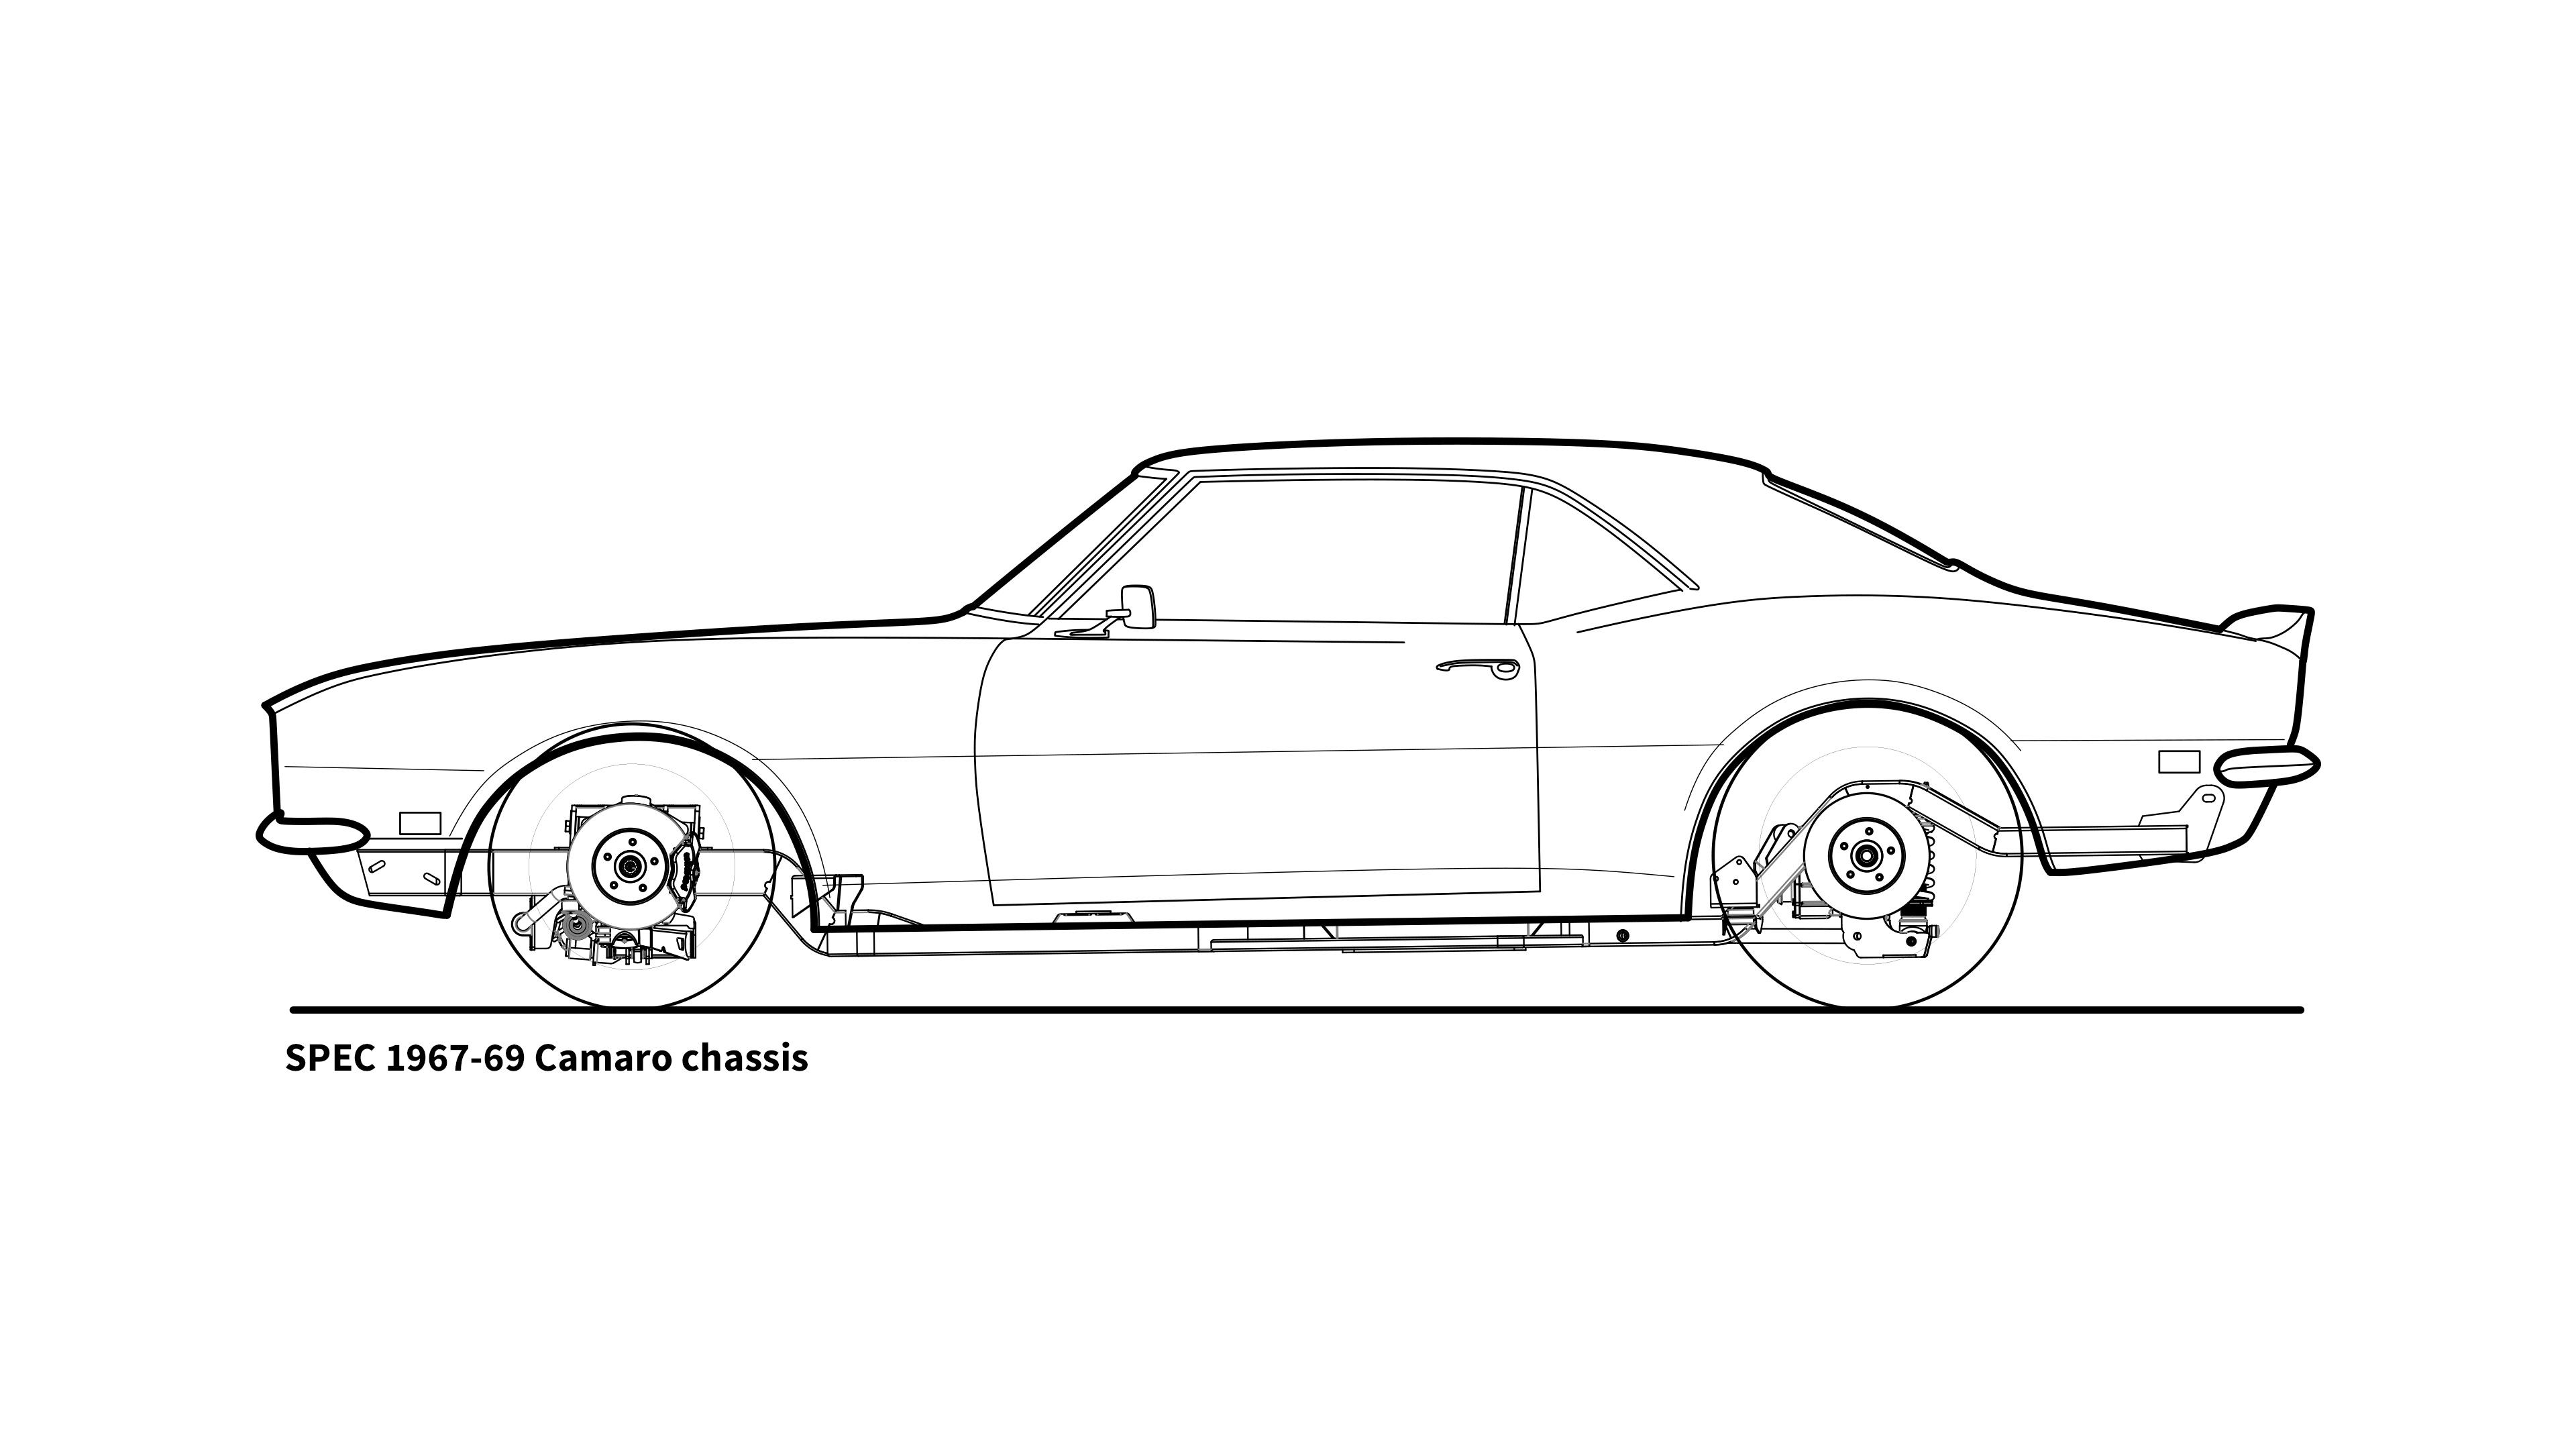 3840x2160 camaro spec chassis - 1969 Camaro Drawing.